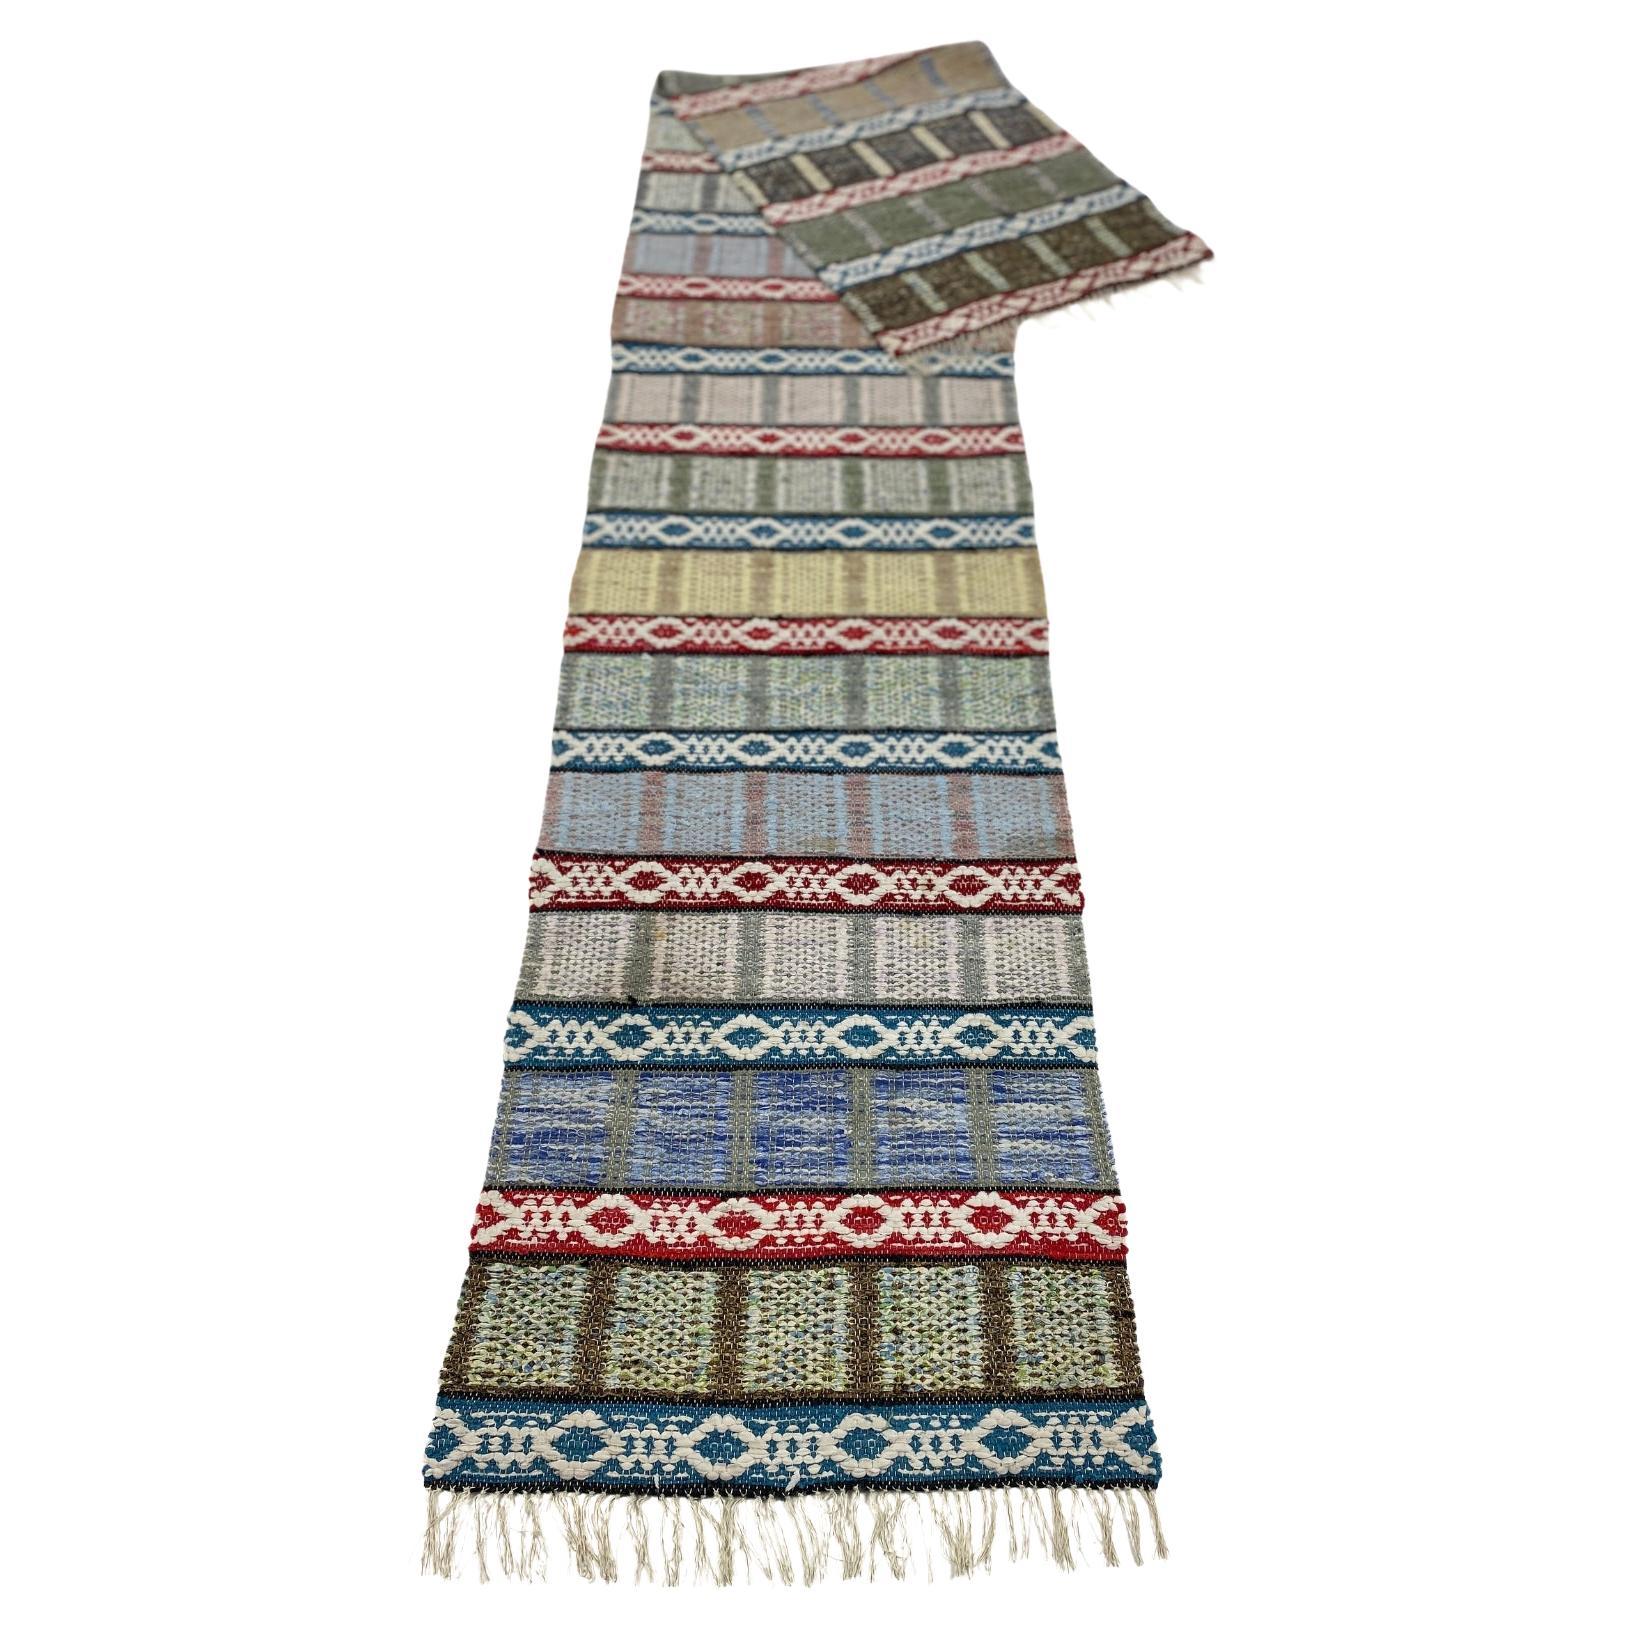 20th Century Swedish rag rug Ölands Eddy´s sommaräng Blåklocka - handwoven  For Sale